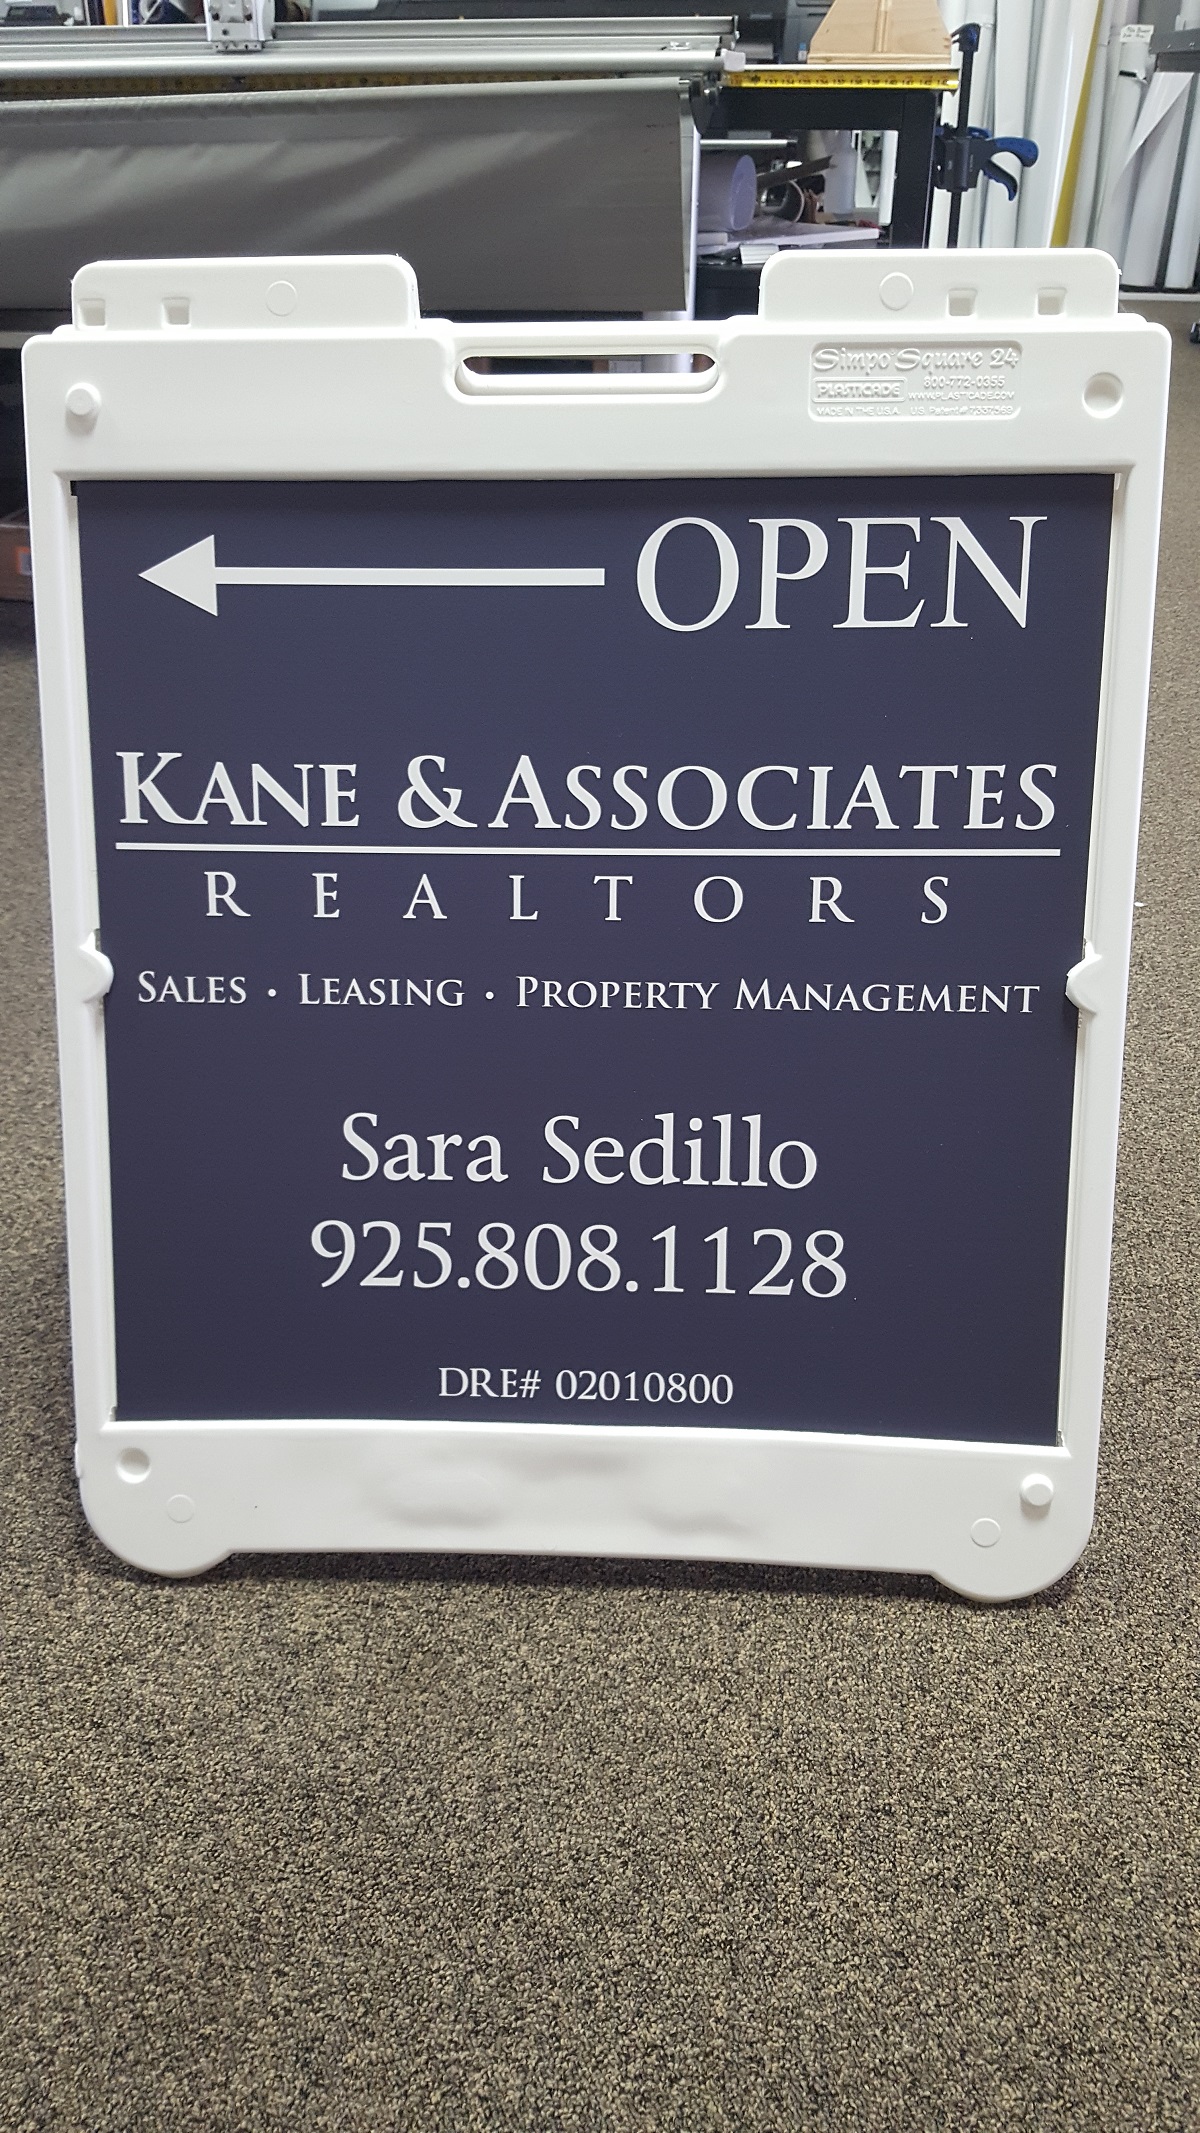 Kane & Associates Realtors a-frame sign